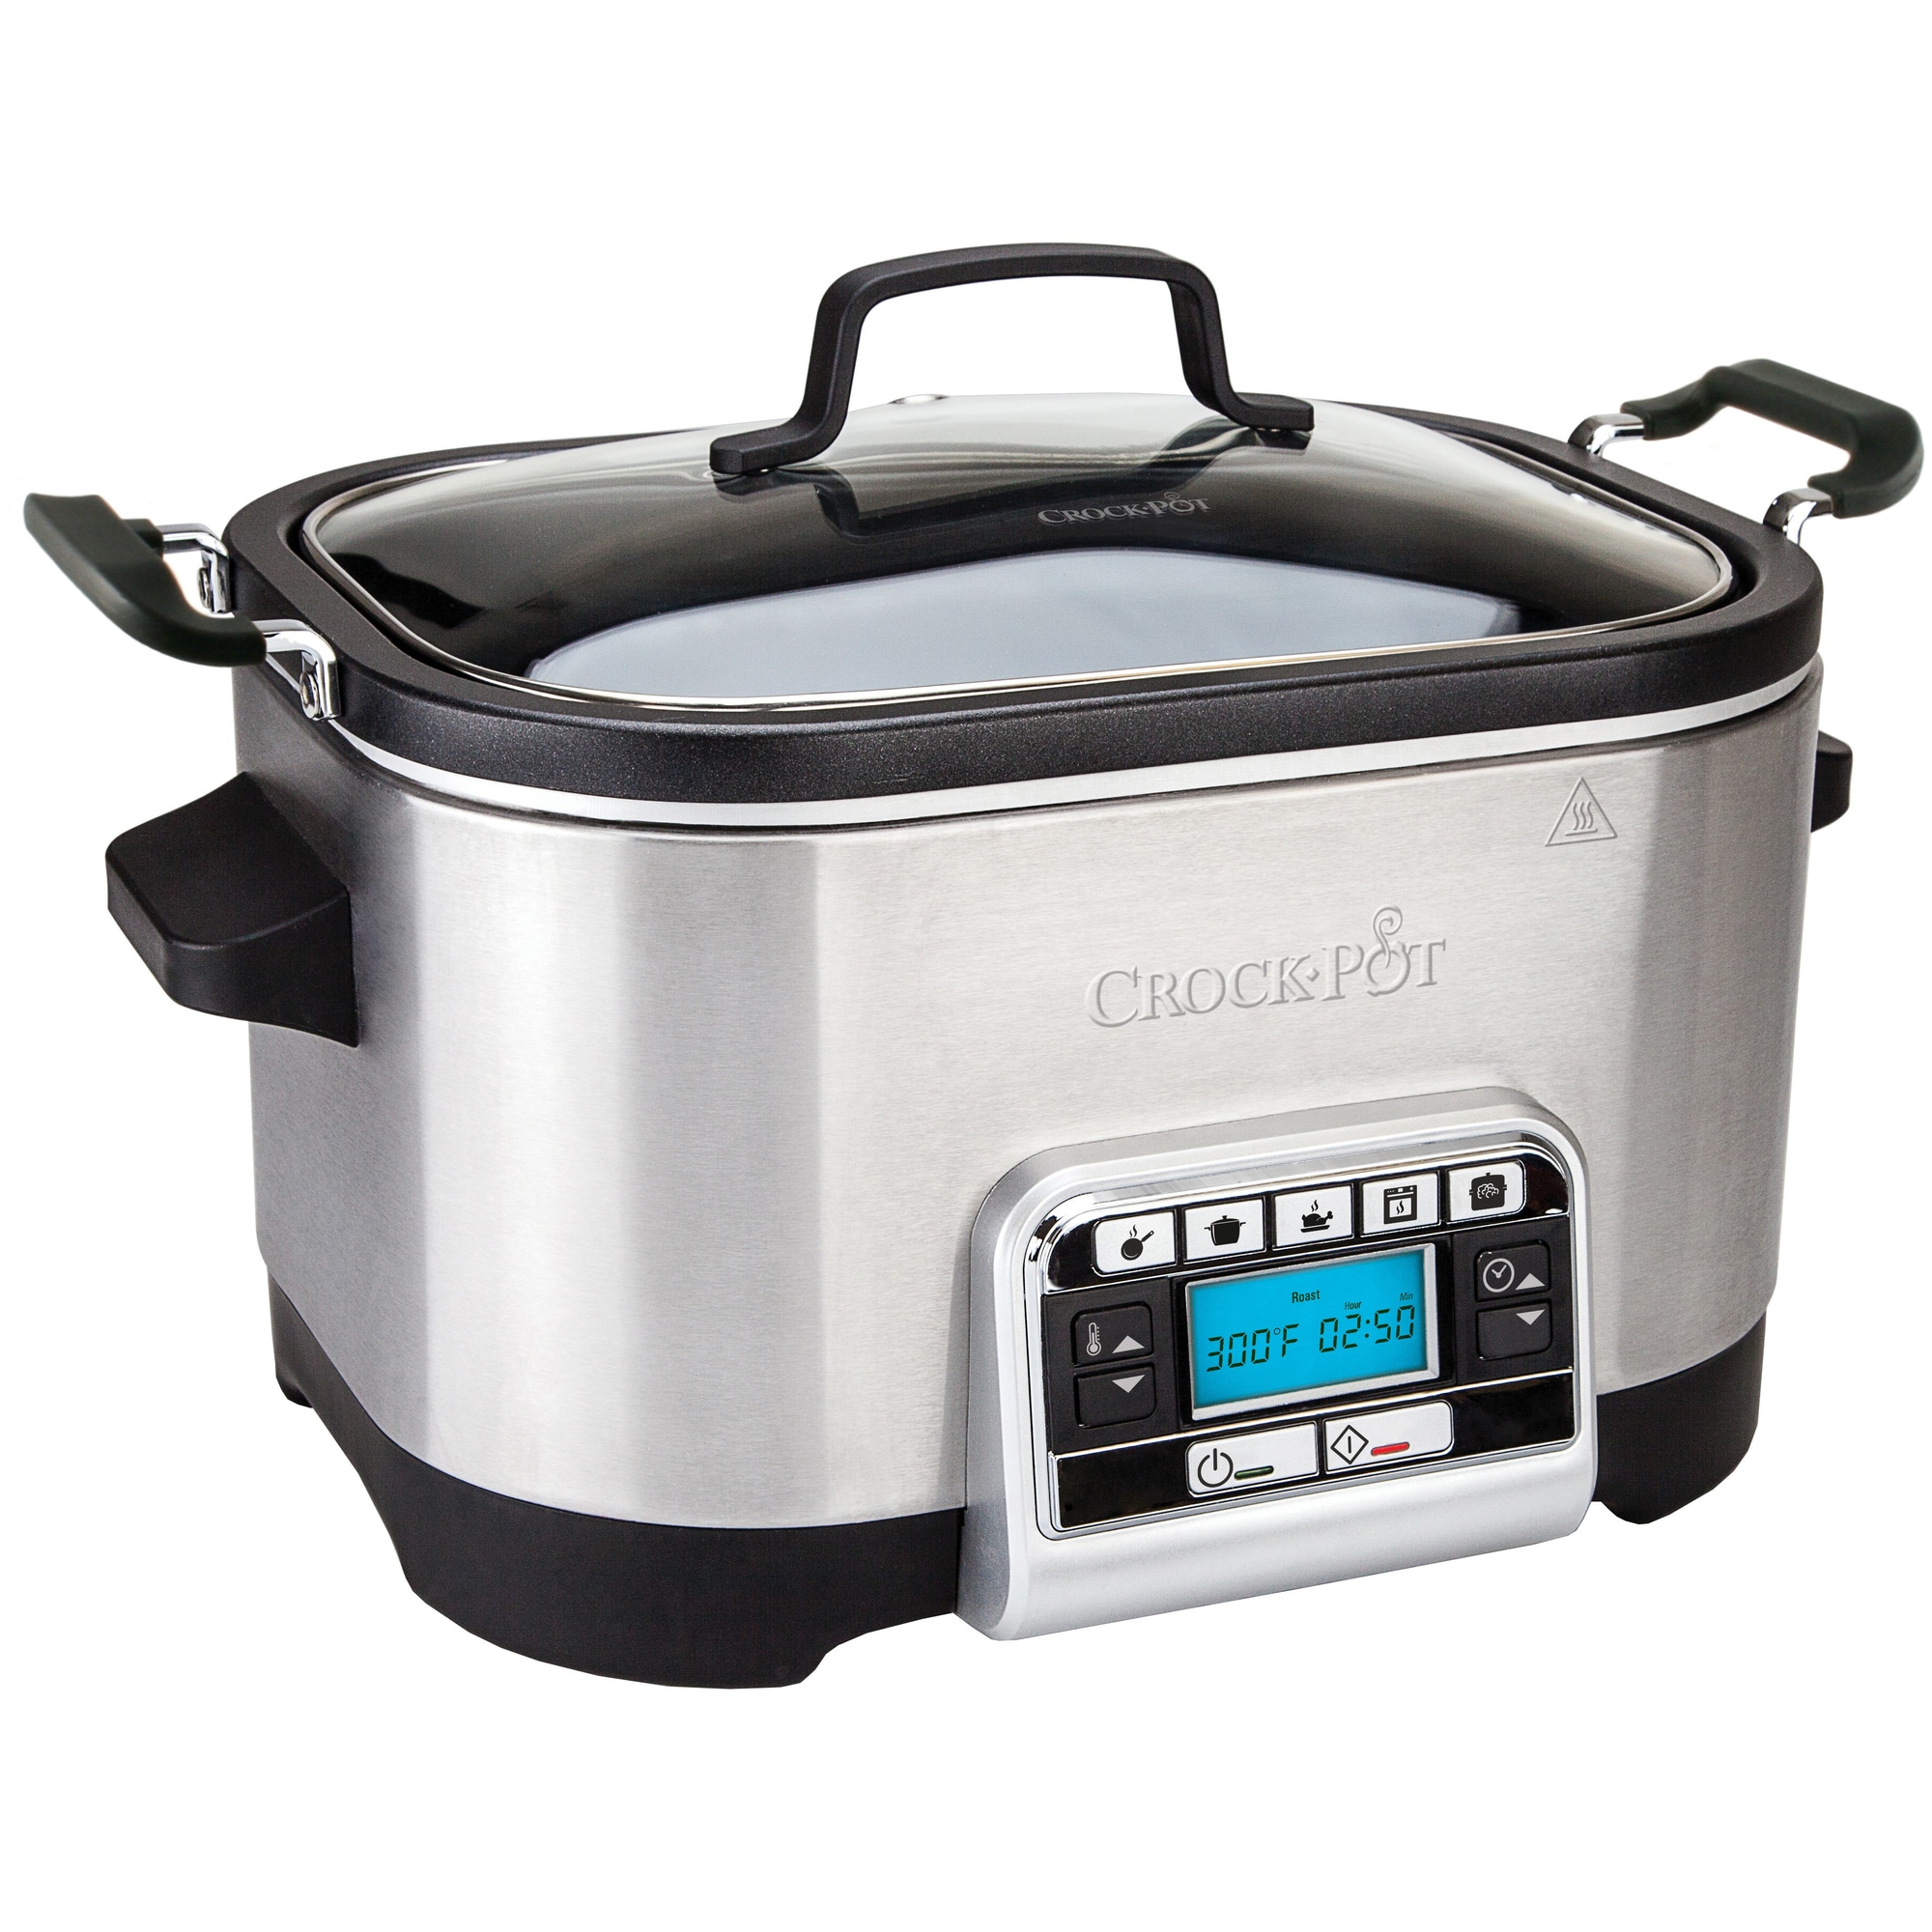 10: Crock-Pot slow cooker